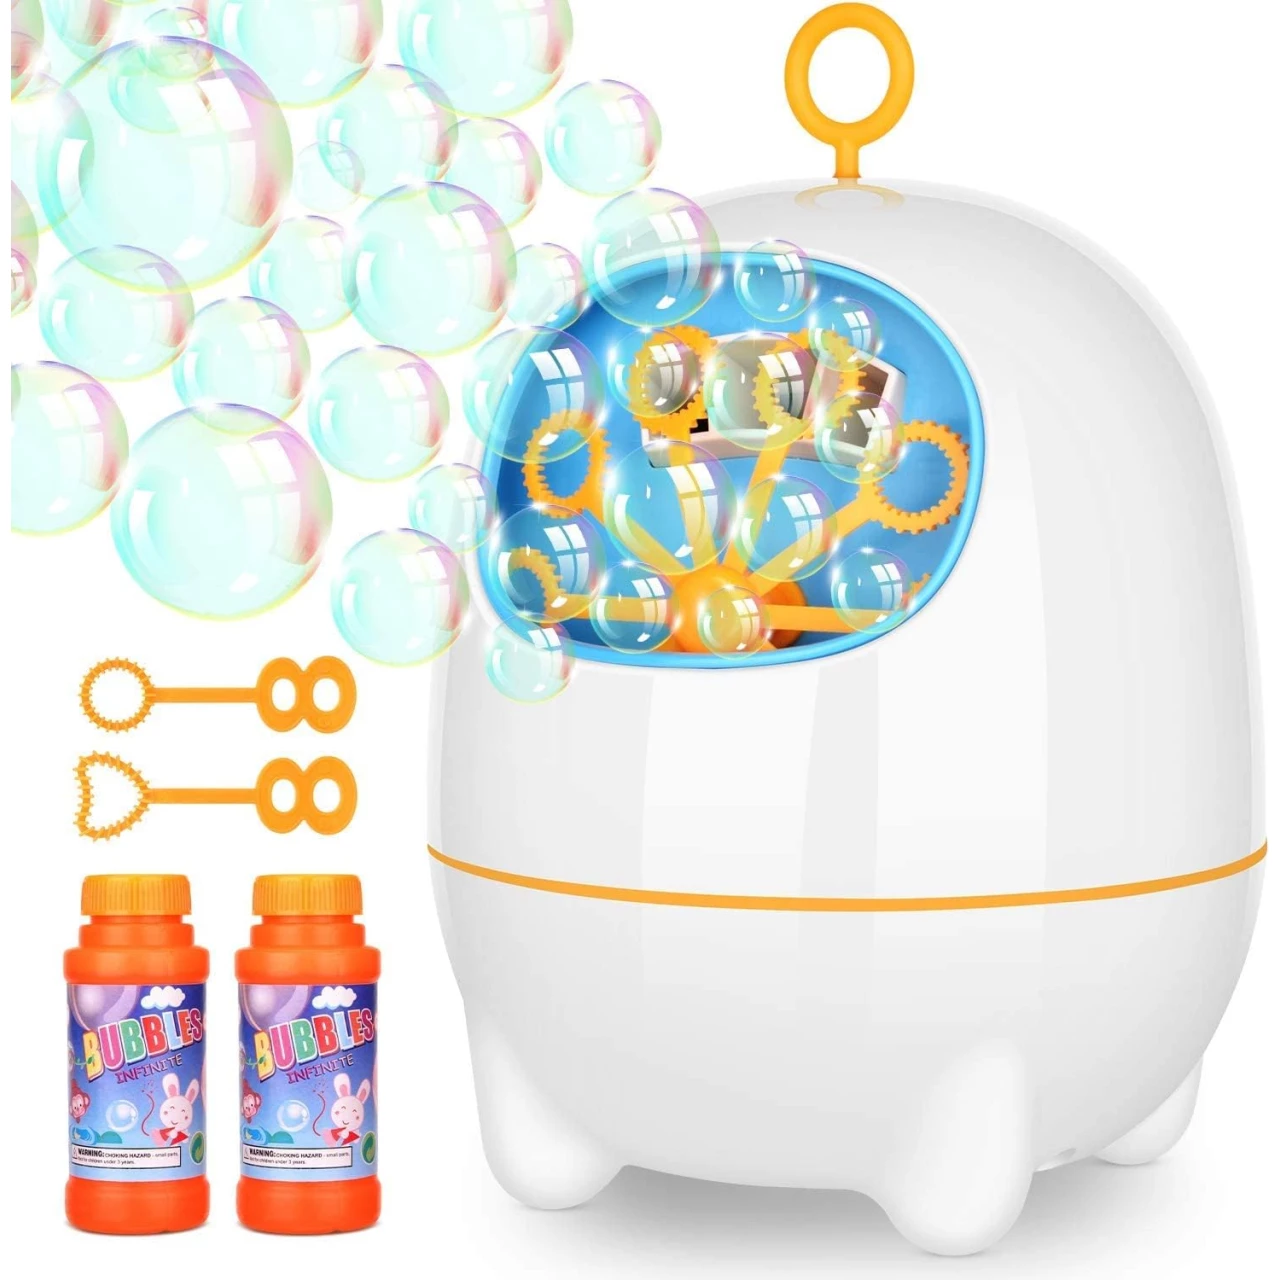 Victostar Bubble Machine, Automatic Bubble Machine for Kids with Bubbles Solutions